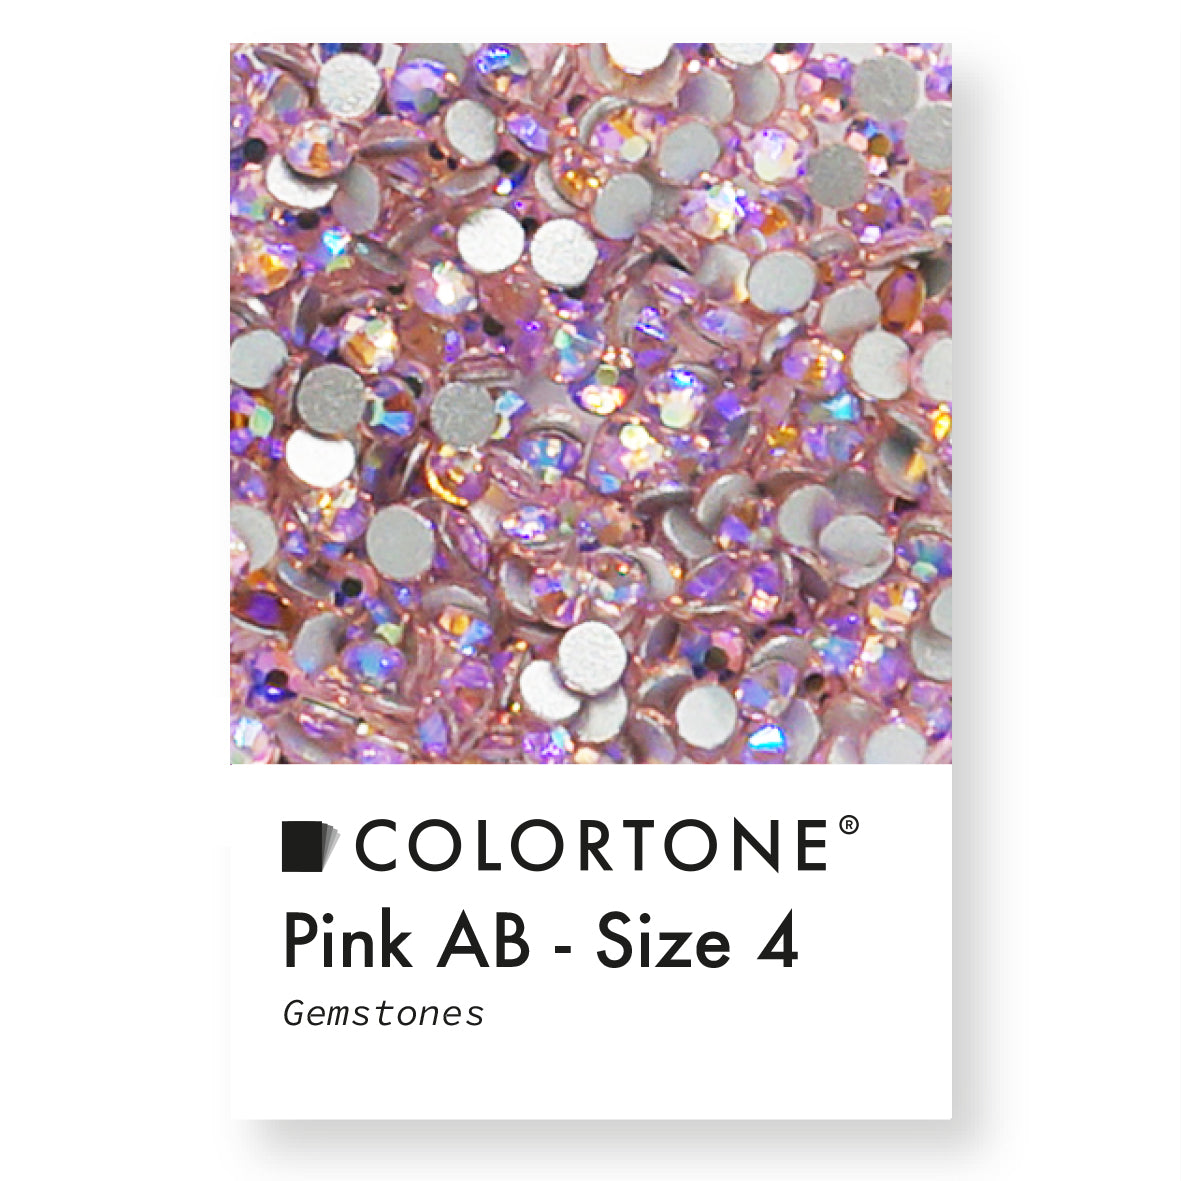 Pink Aurora Borealis Gemstones - Size 4